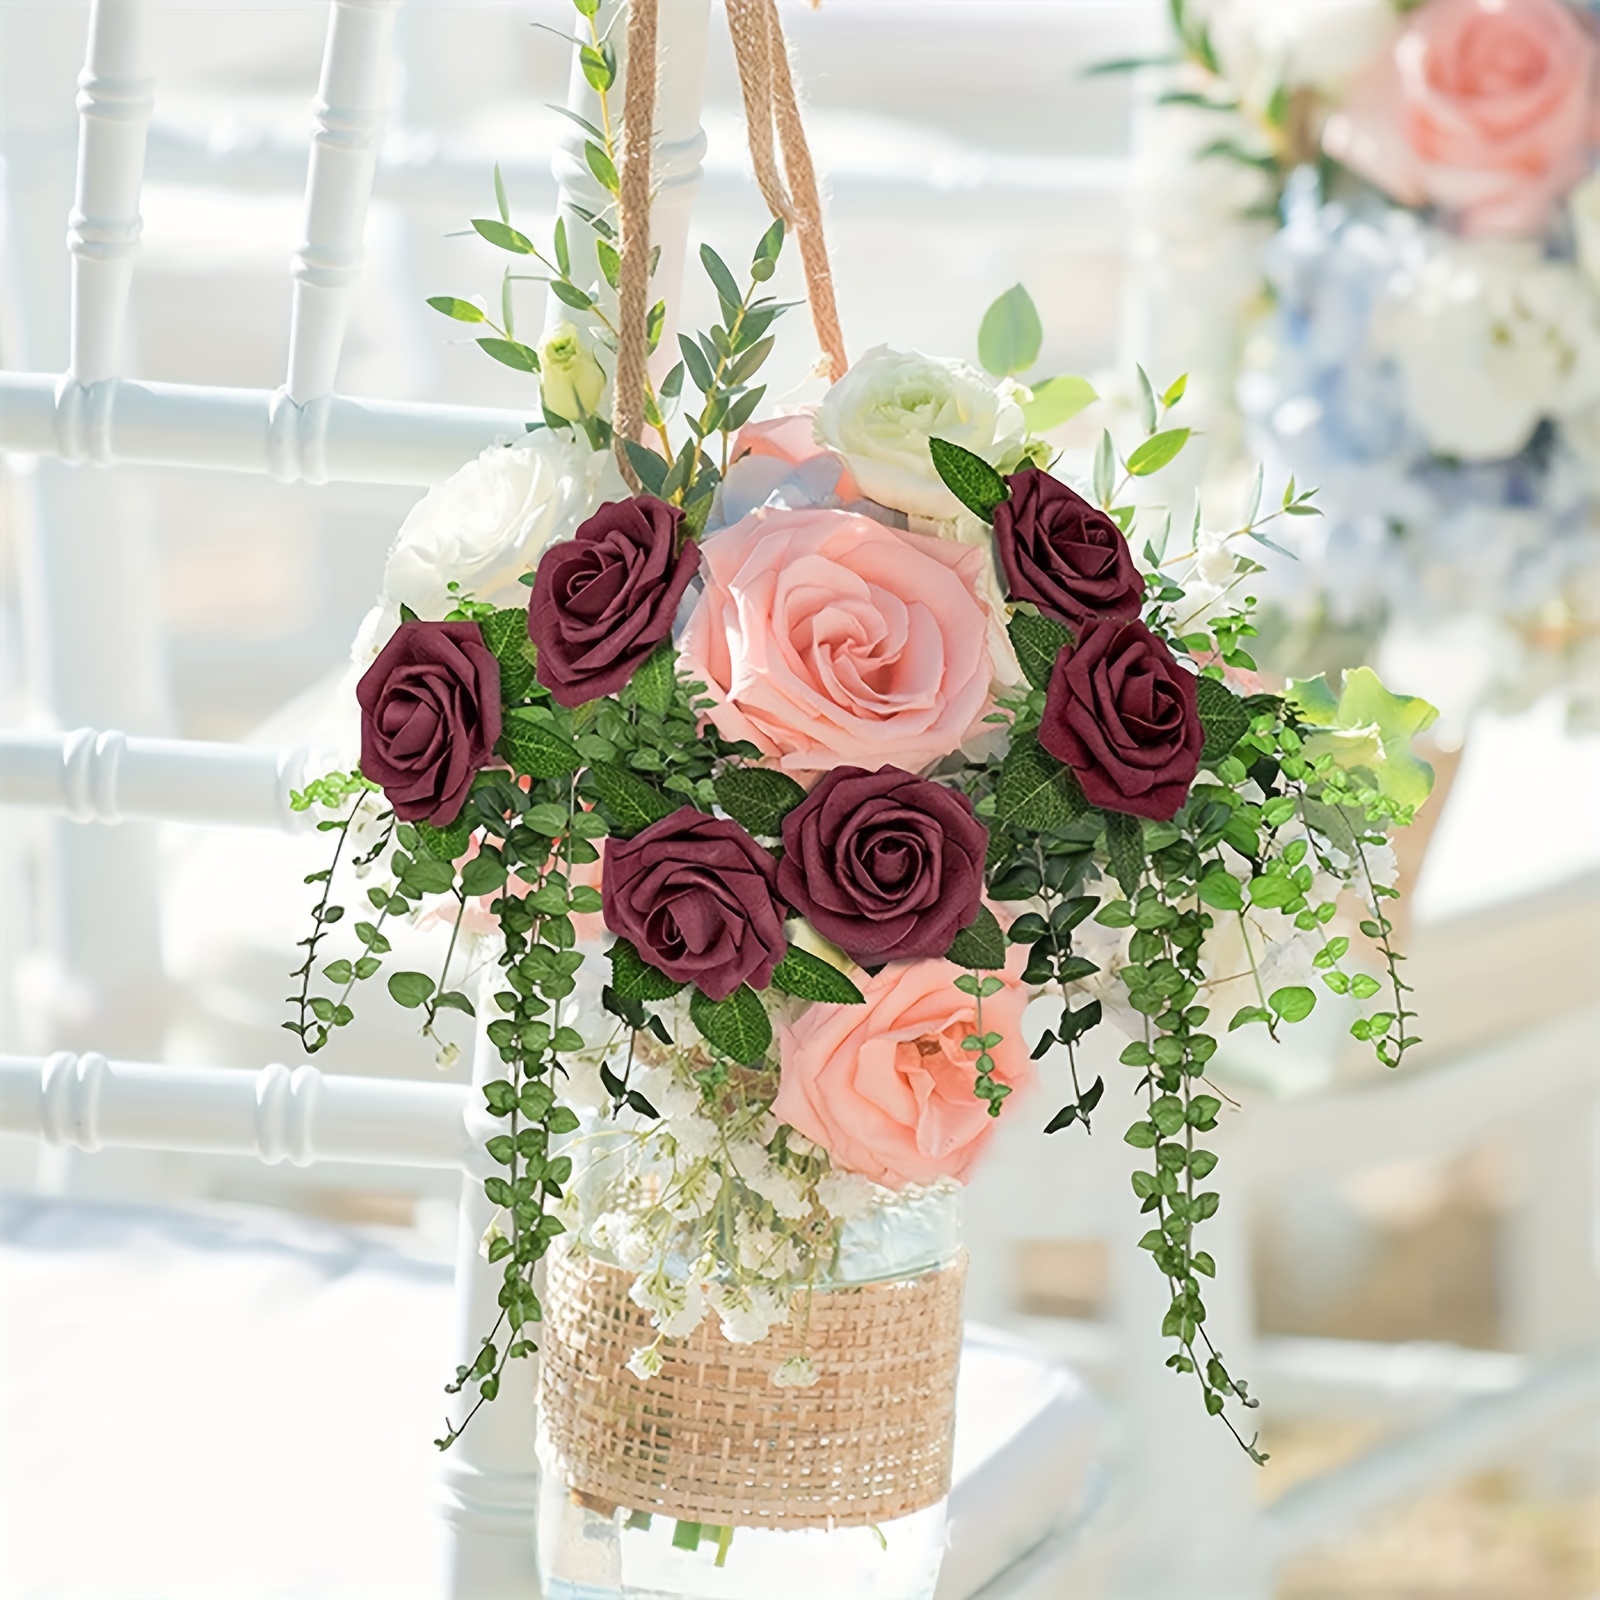 Artificial Floral Arrangements in DIY Wedding 